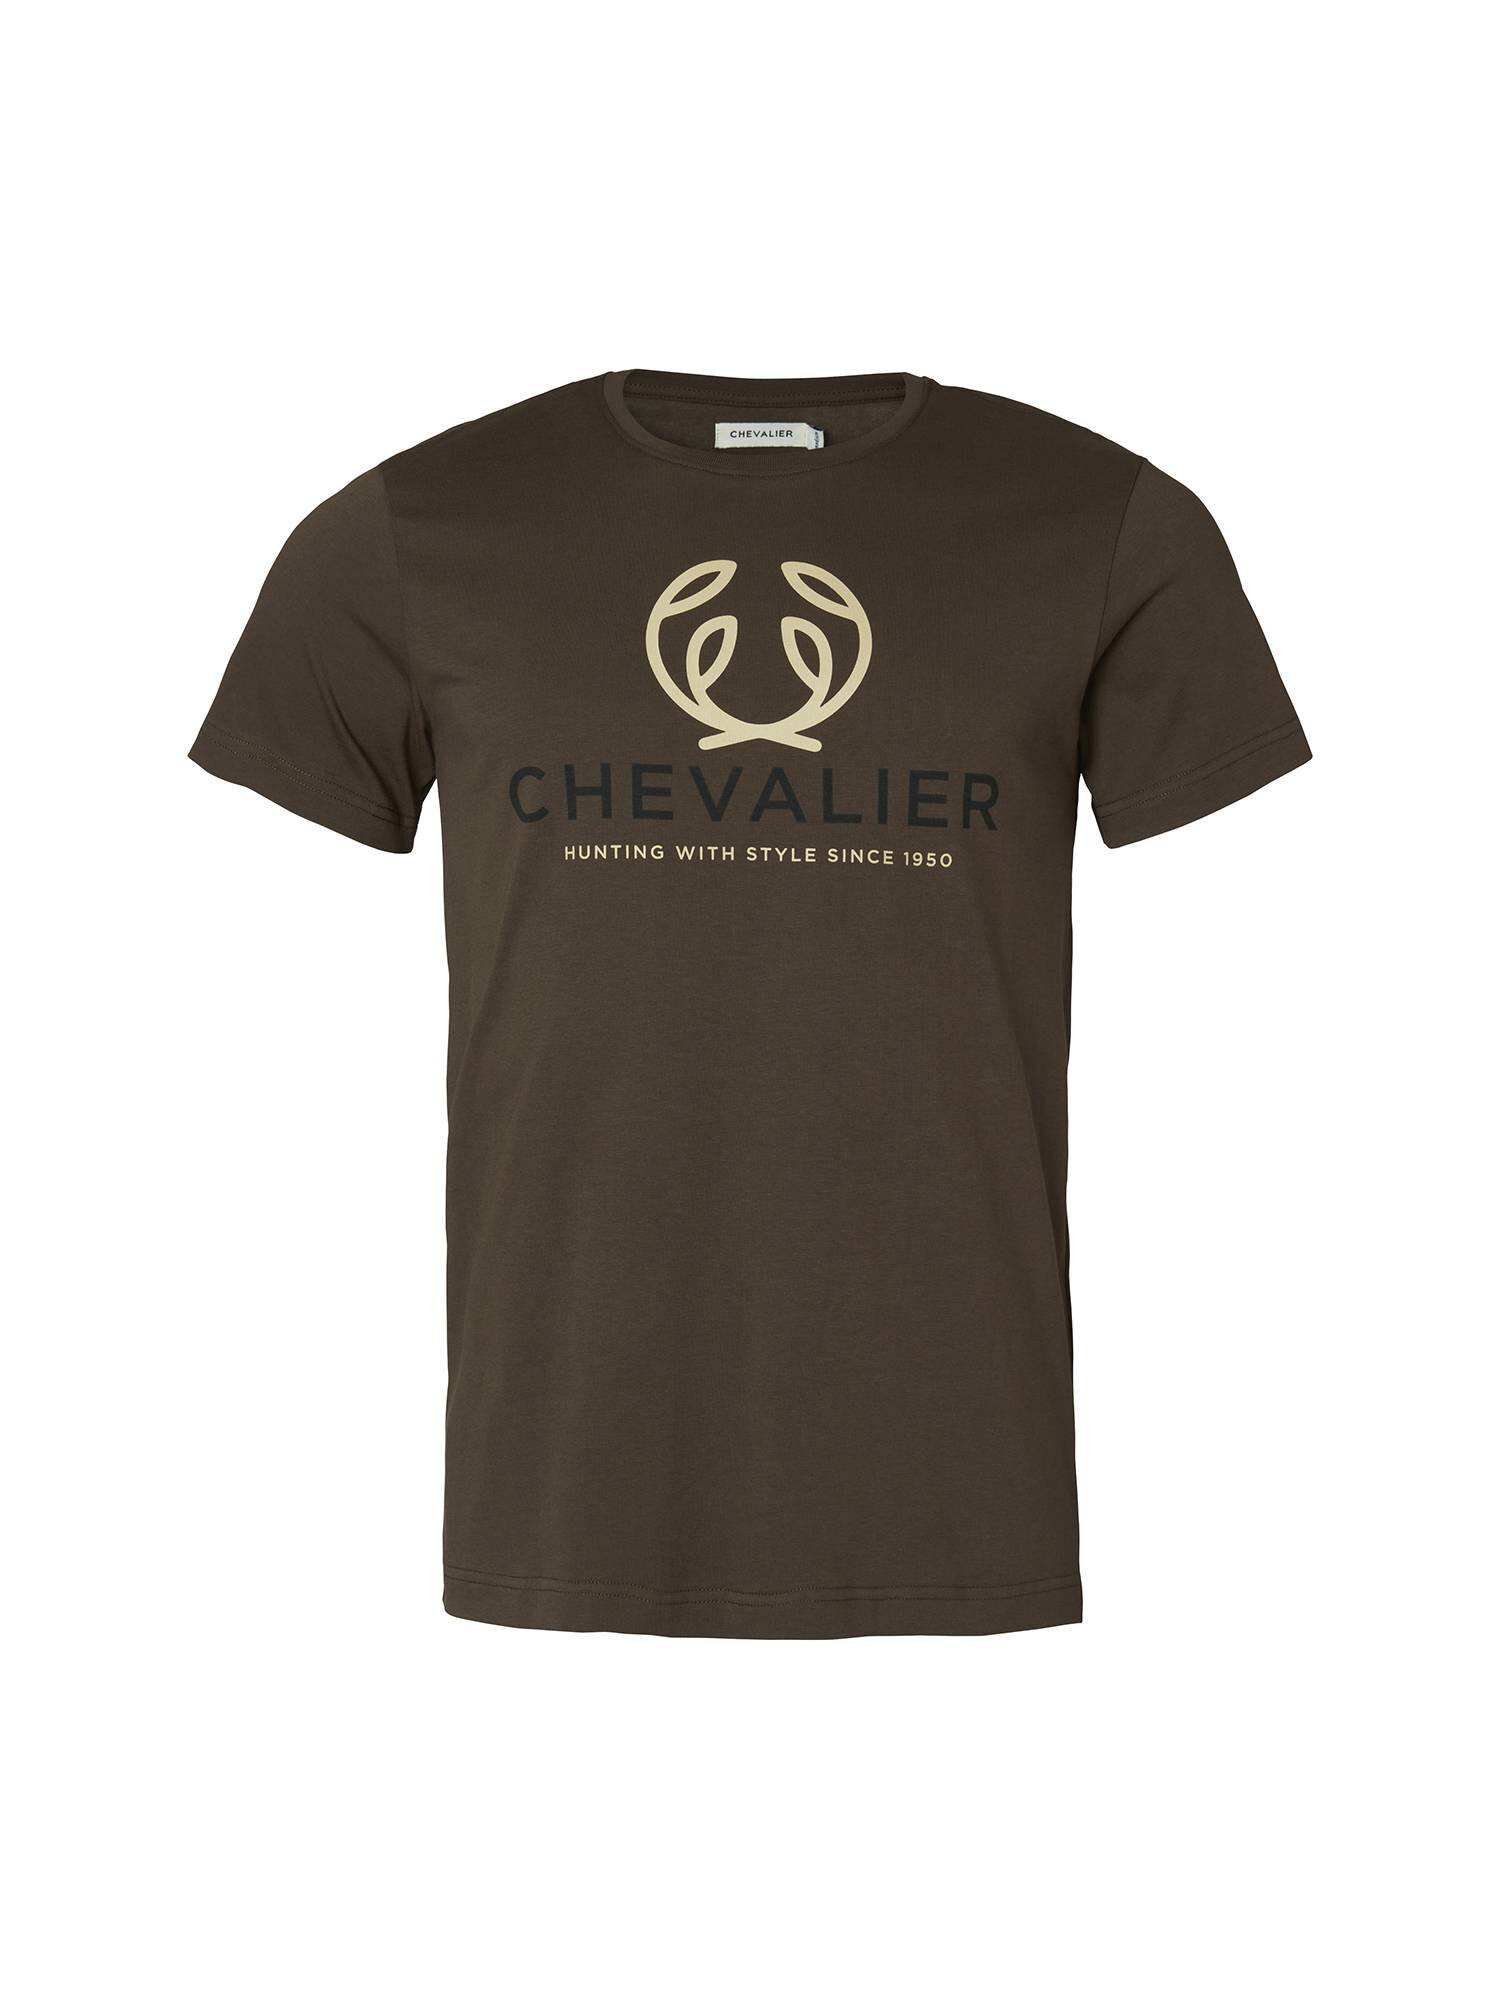 Select Chevalier Logo T-shirt Men